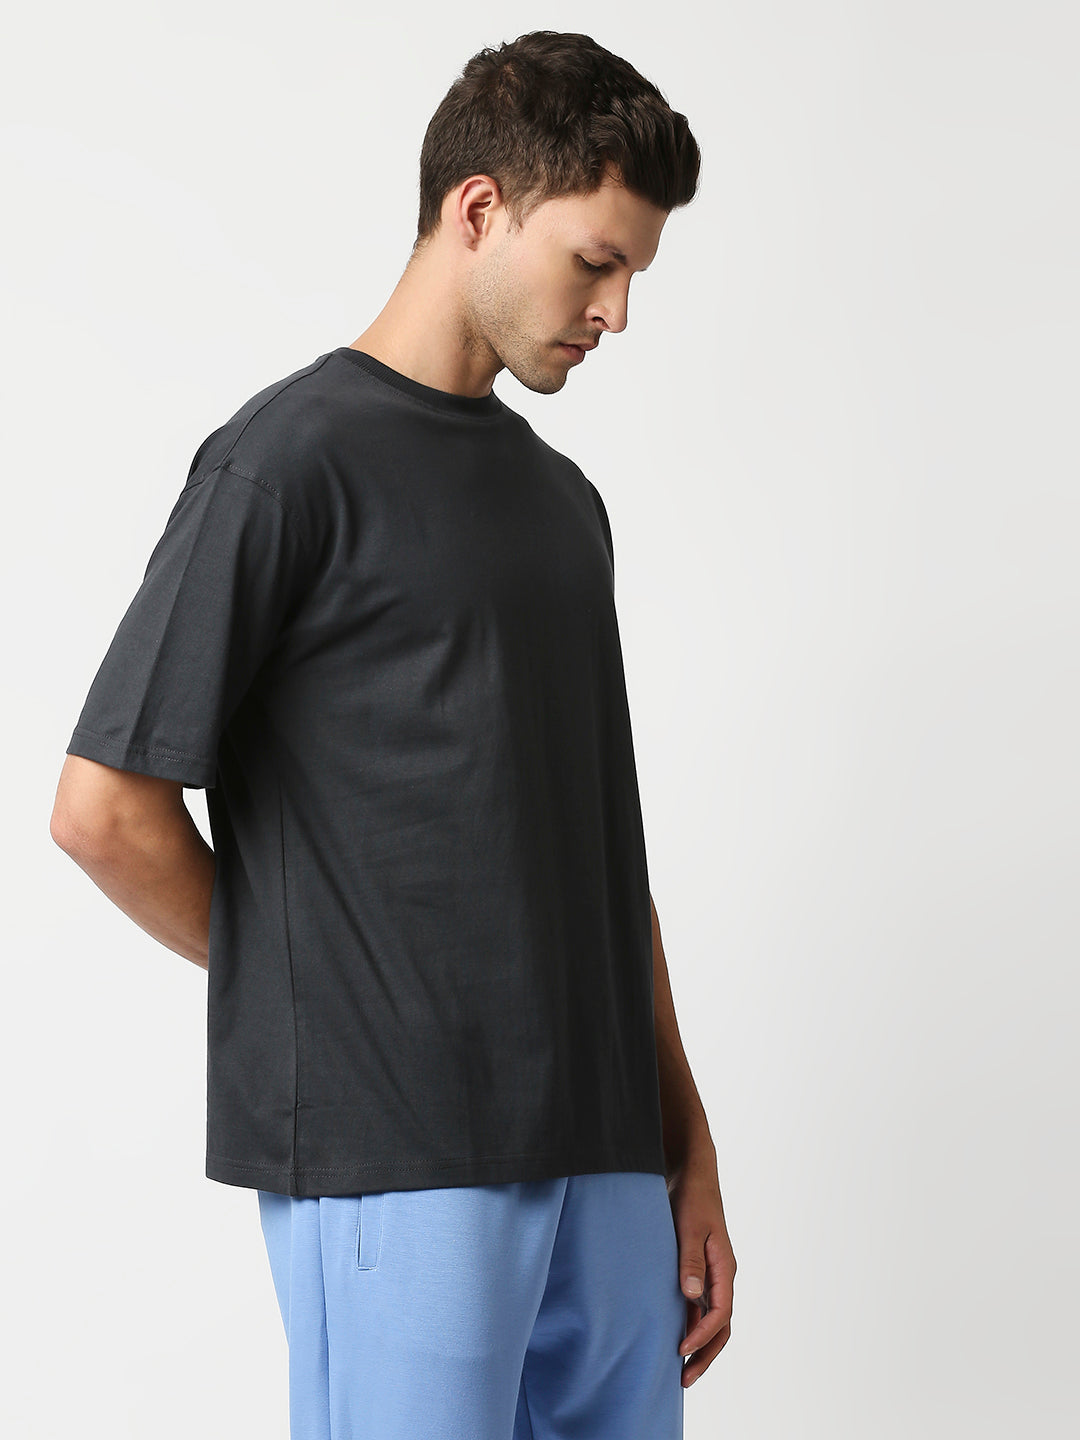 Buy Blamblack Men's Half Sleeves Dark Grey Plain Oversized T Shirt